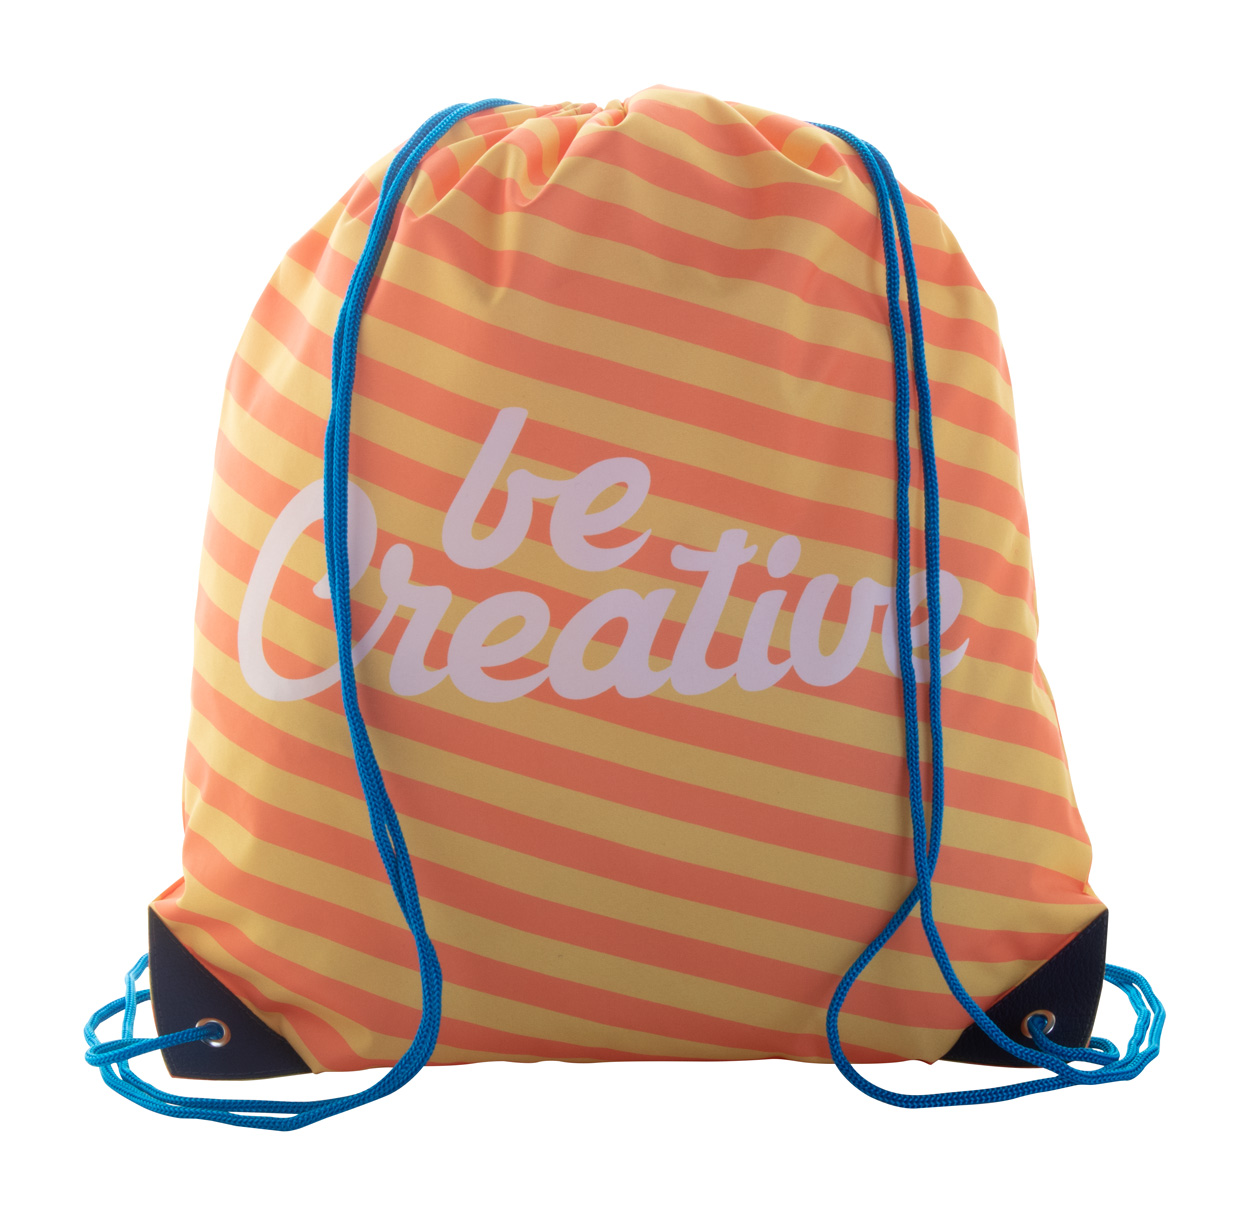 CreaDraw Plus Custom Drawstring Bag - blue